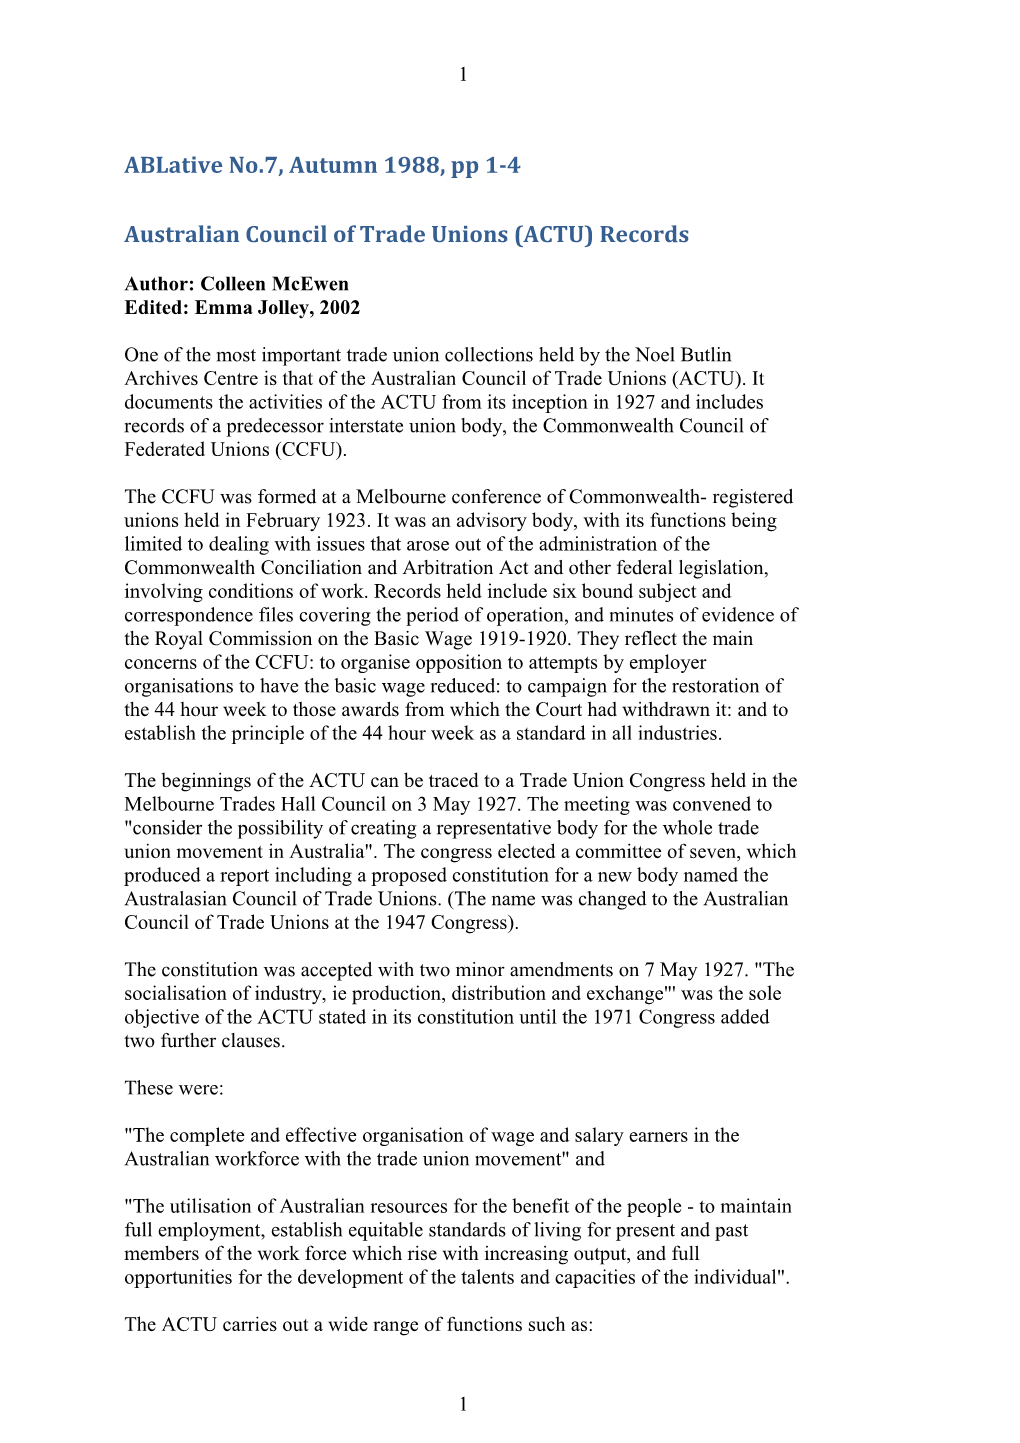 Australian Council of Trade Unions (ACTU) Records